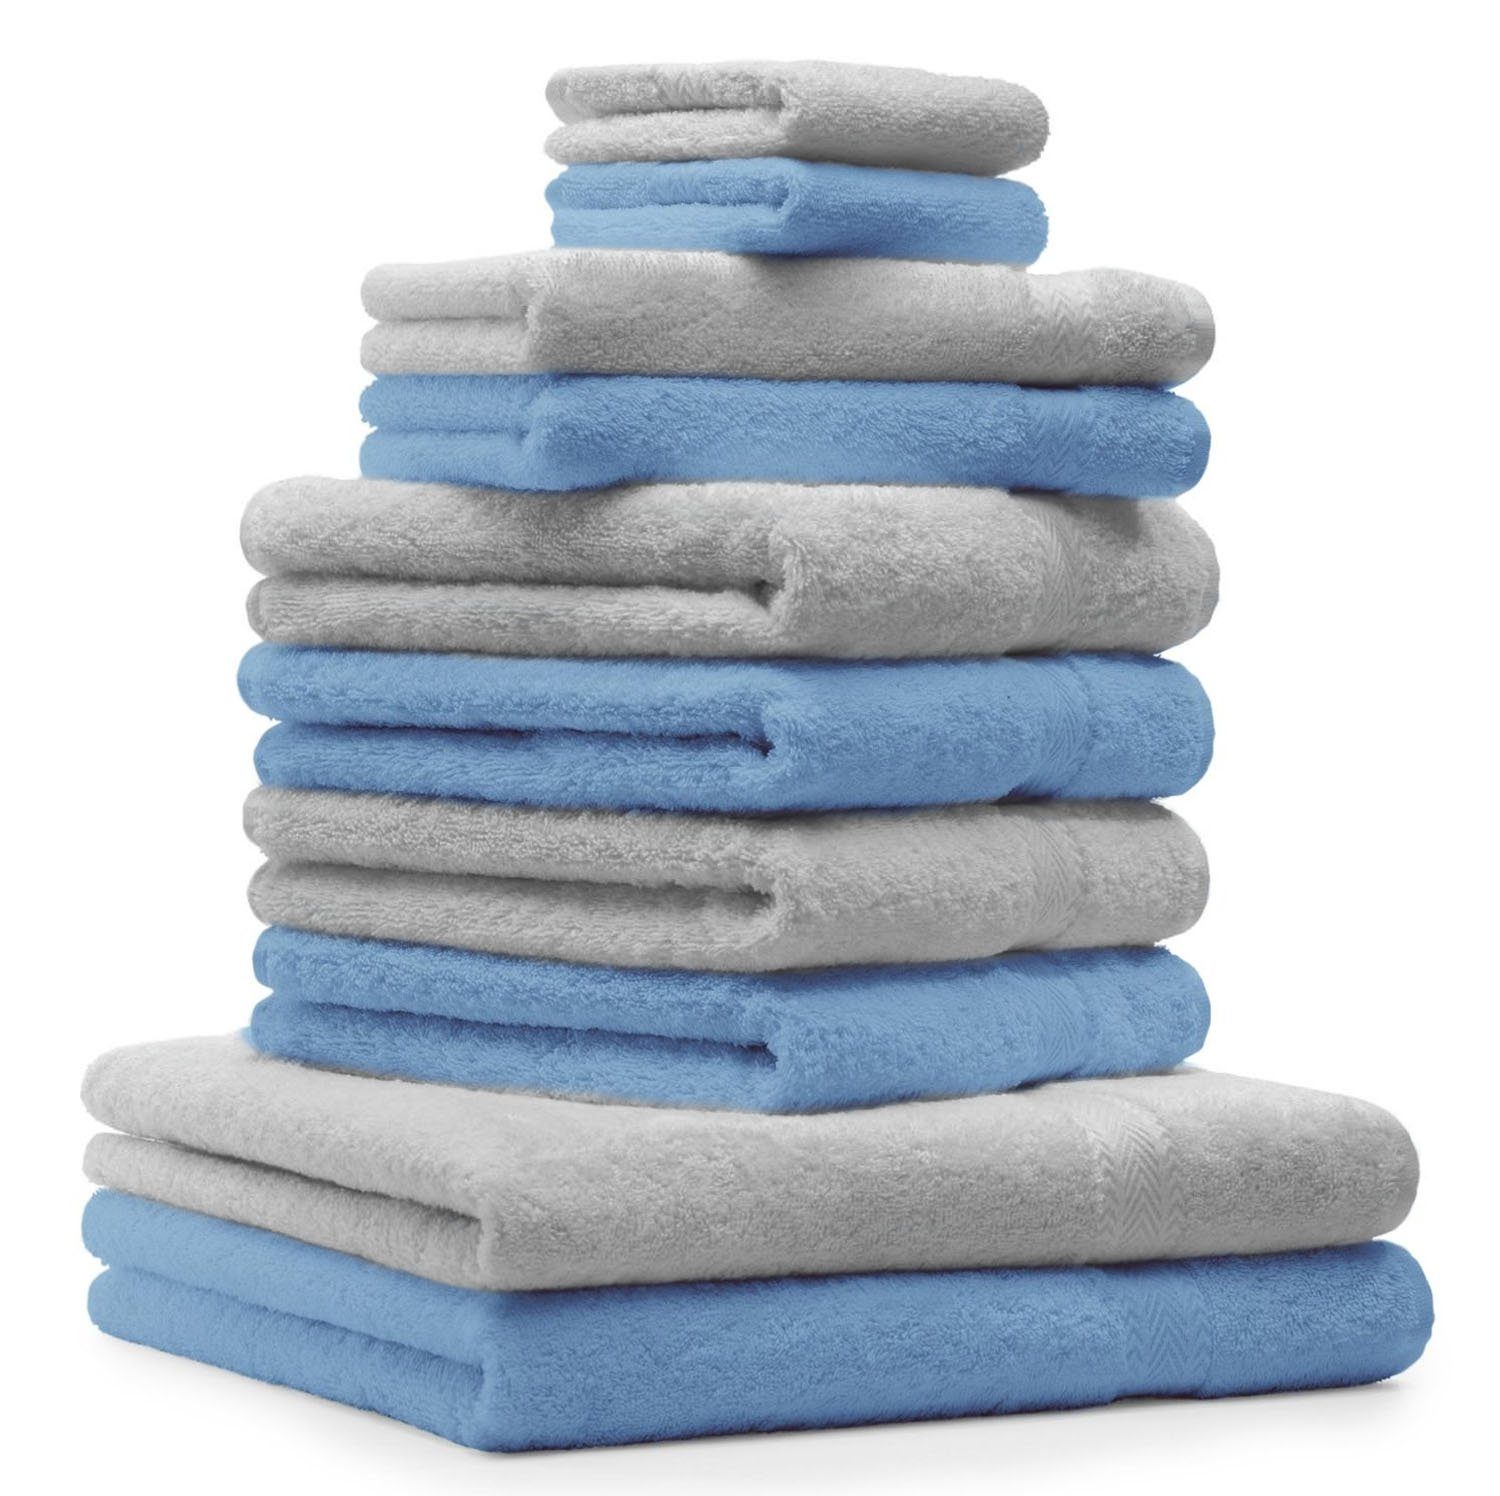 Betz Handtuch Set 10-TLG. Handtuch-Set Classic Farbe hellblau und silbergrau, 100% Baumwolle